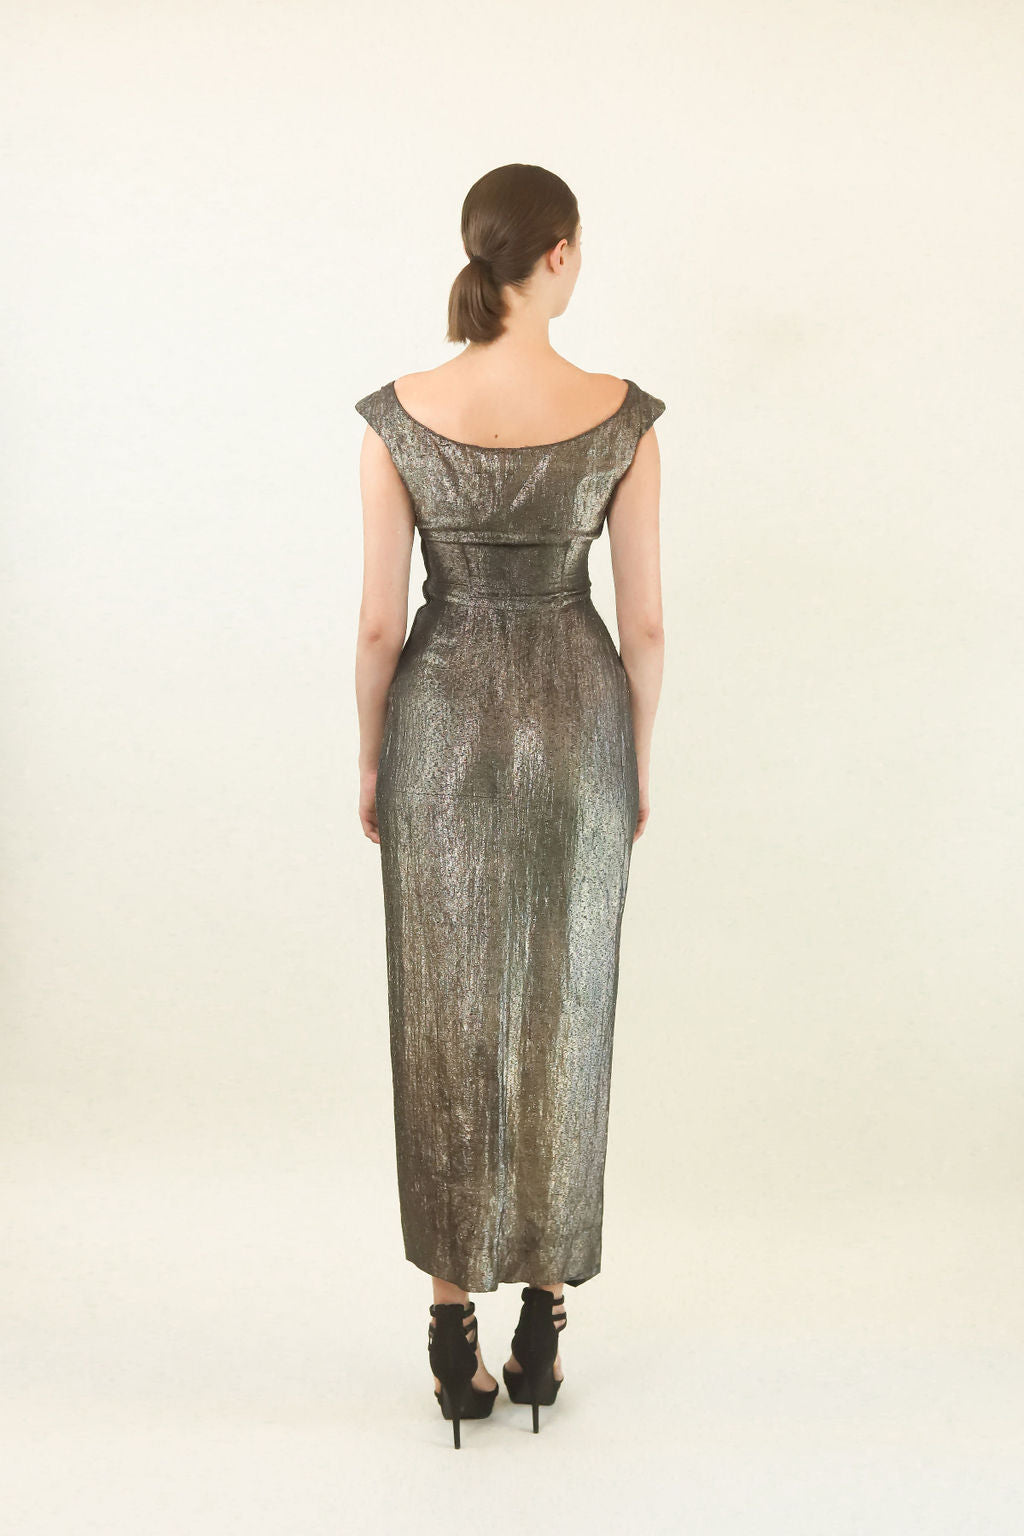 Jane Engel NY Silver Lame Dress 1940's